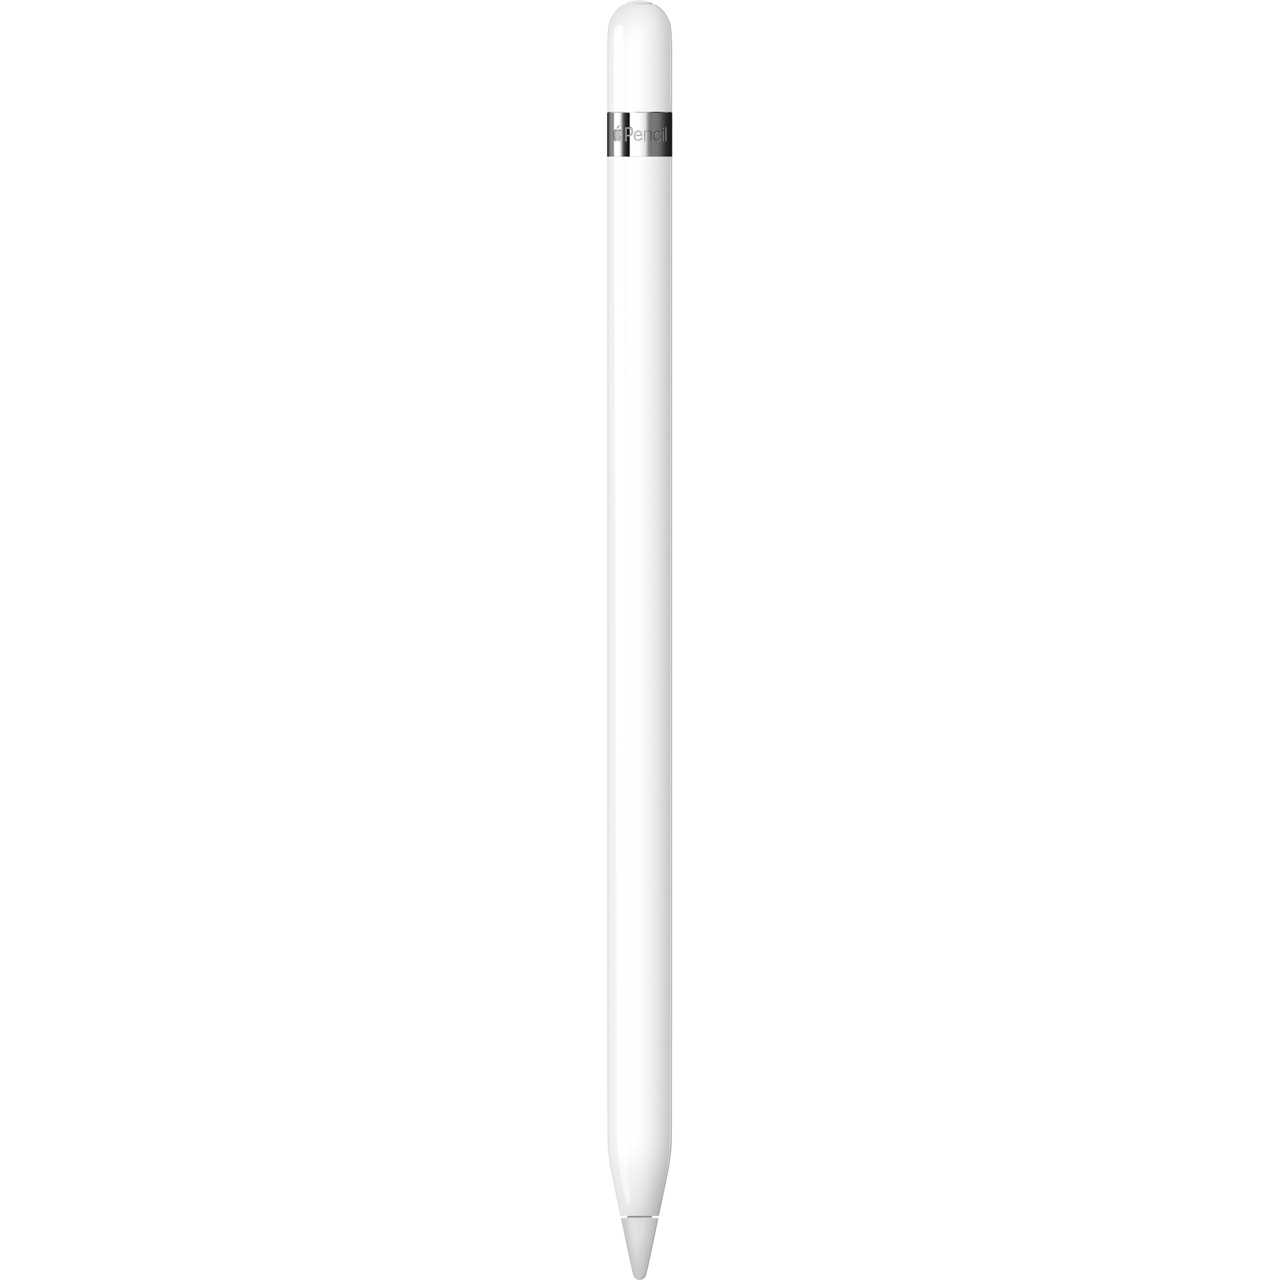 Apple Pencil Review